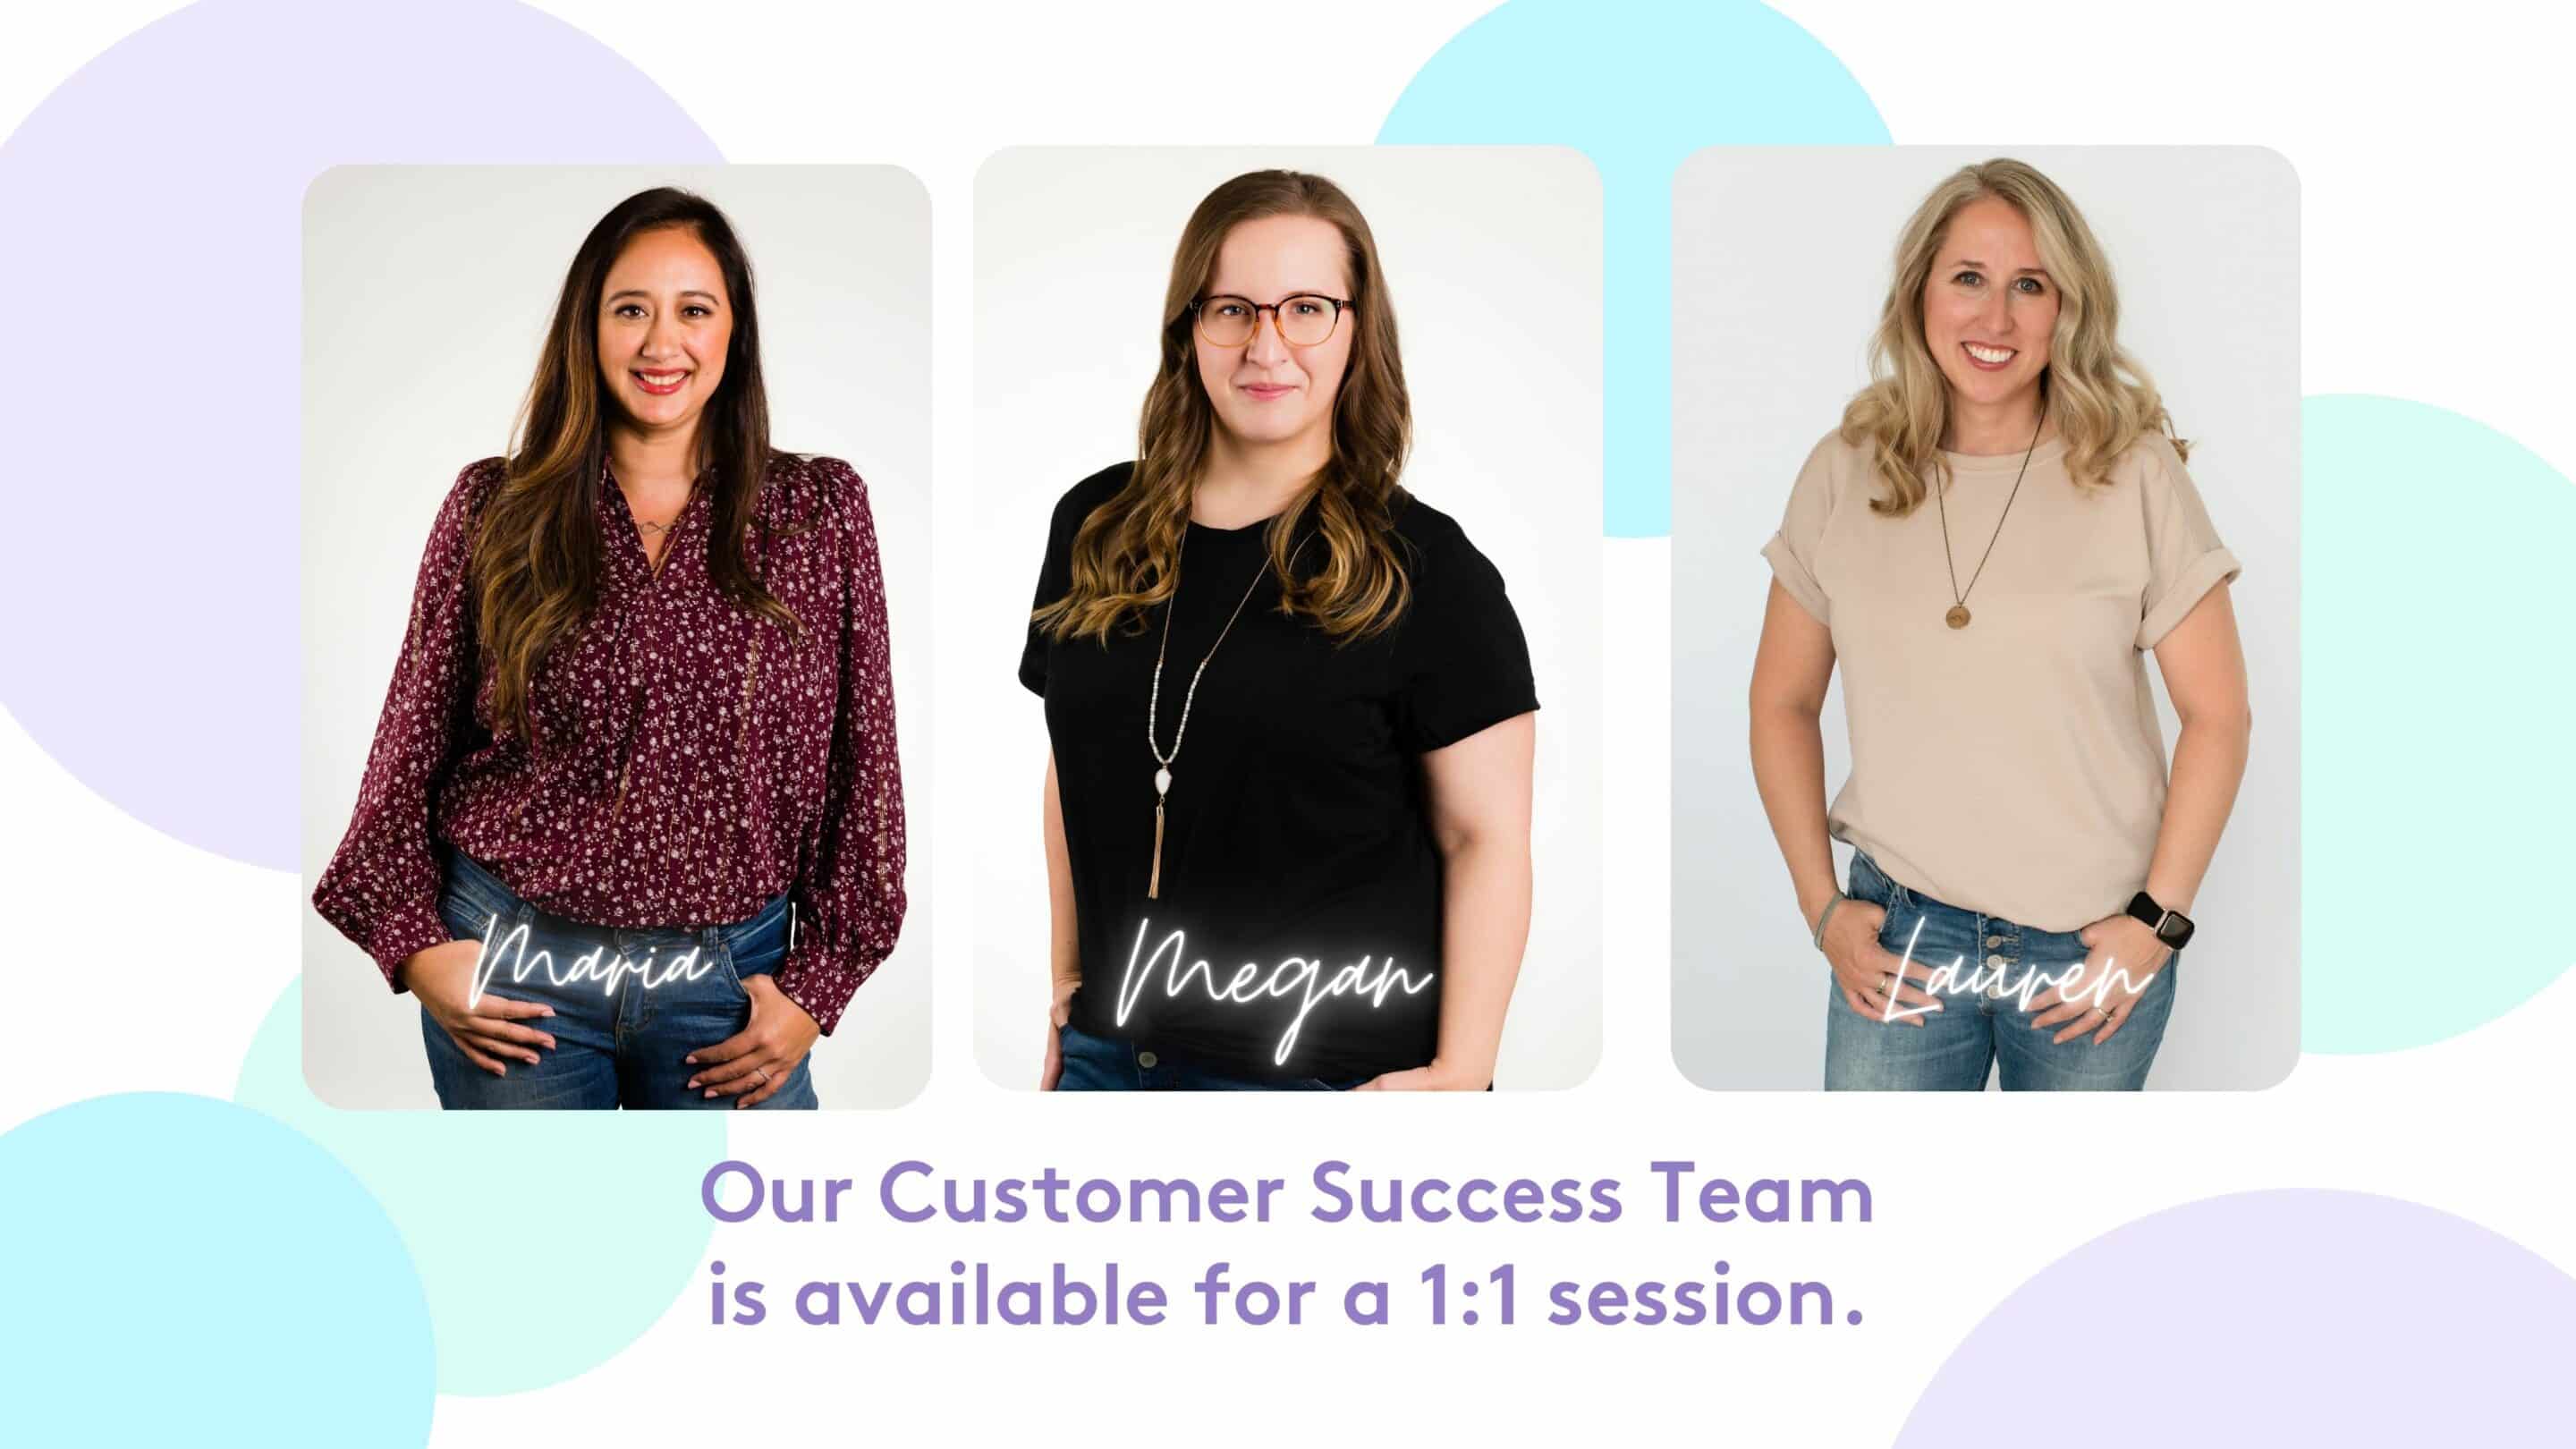 Iris Customer Support Team